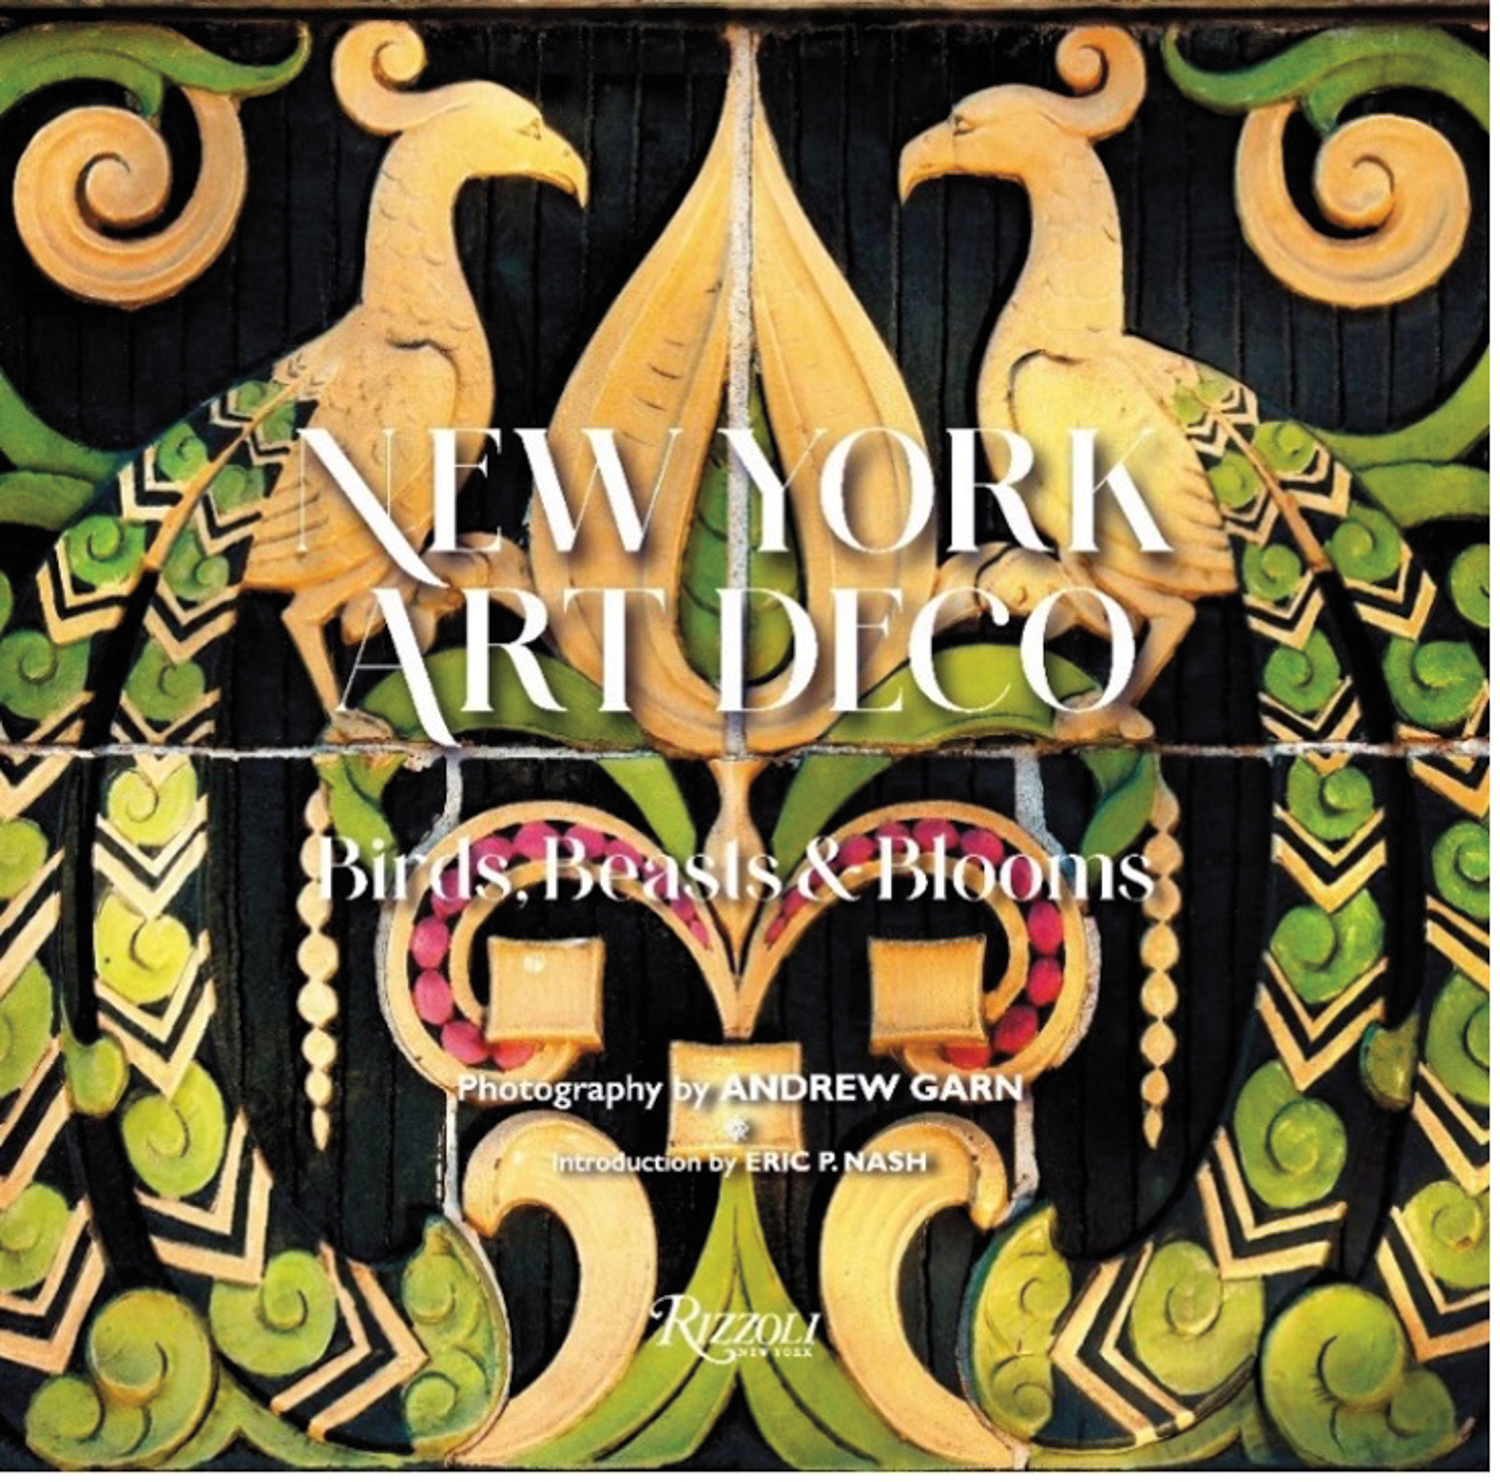 book cover of New York Art Deco: Birds, Beasts & Bloom